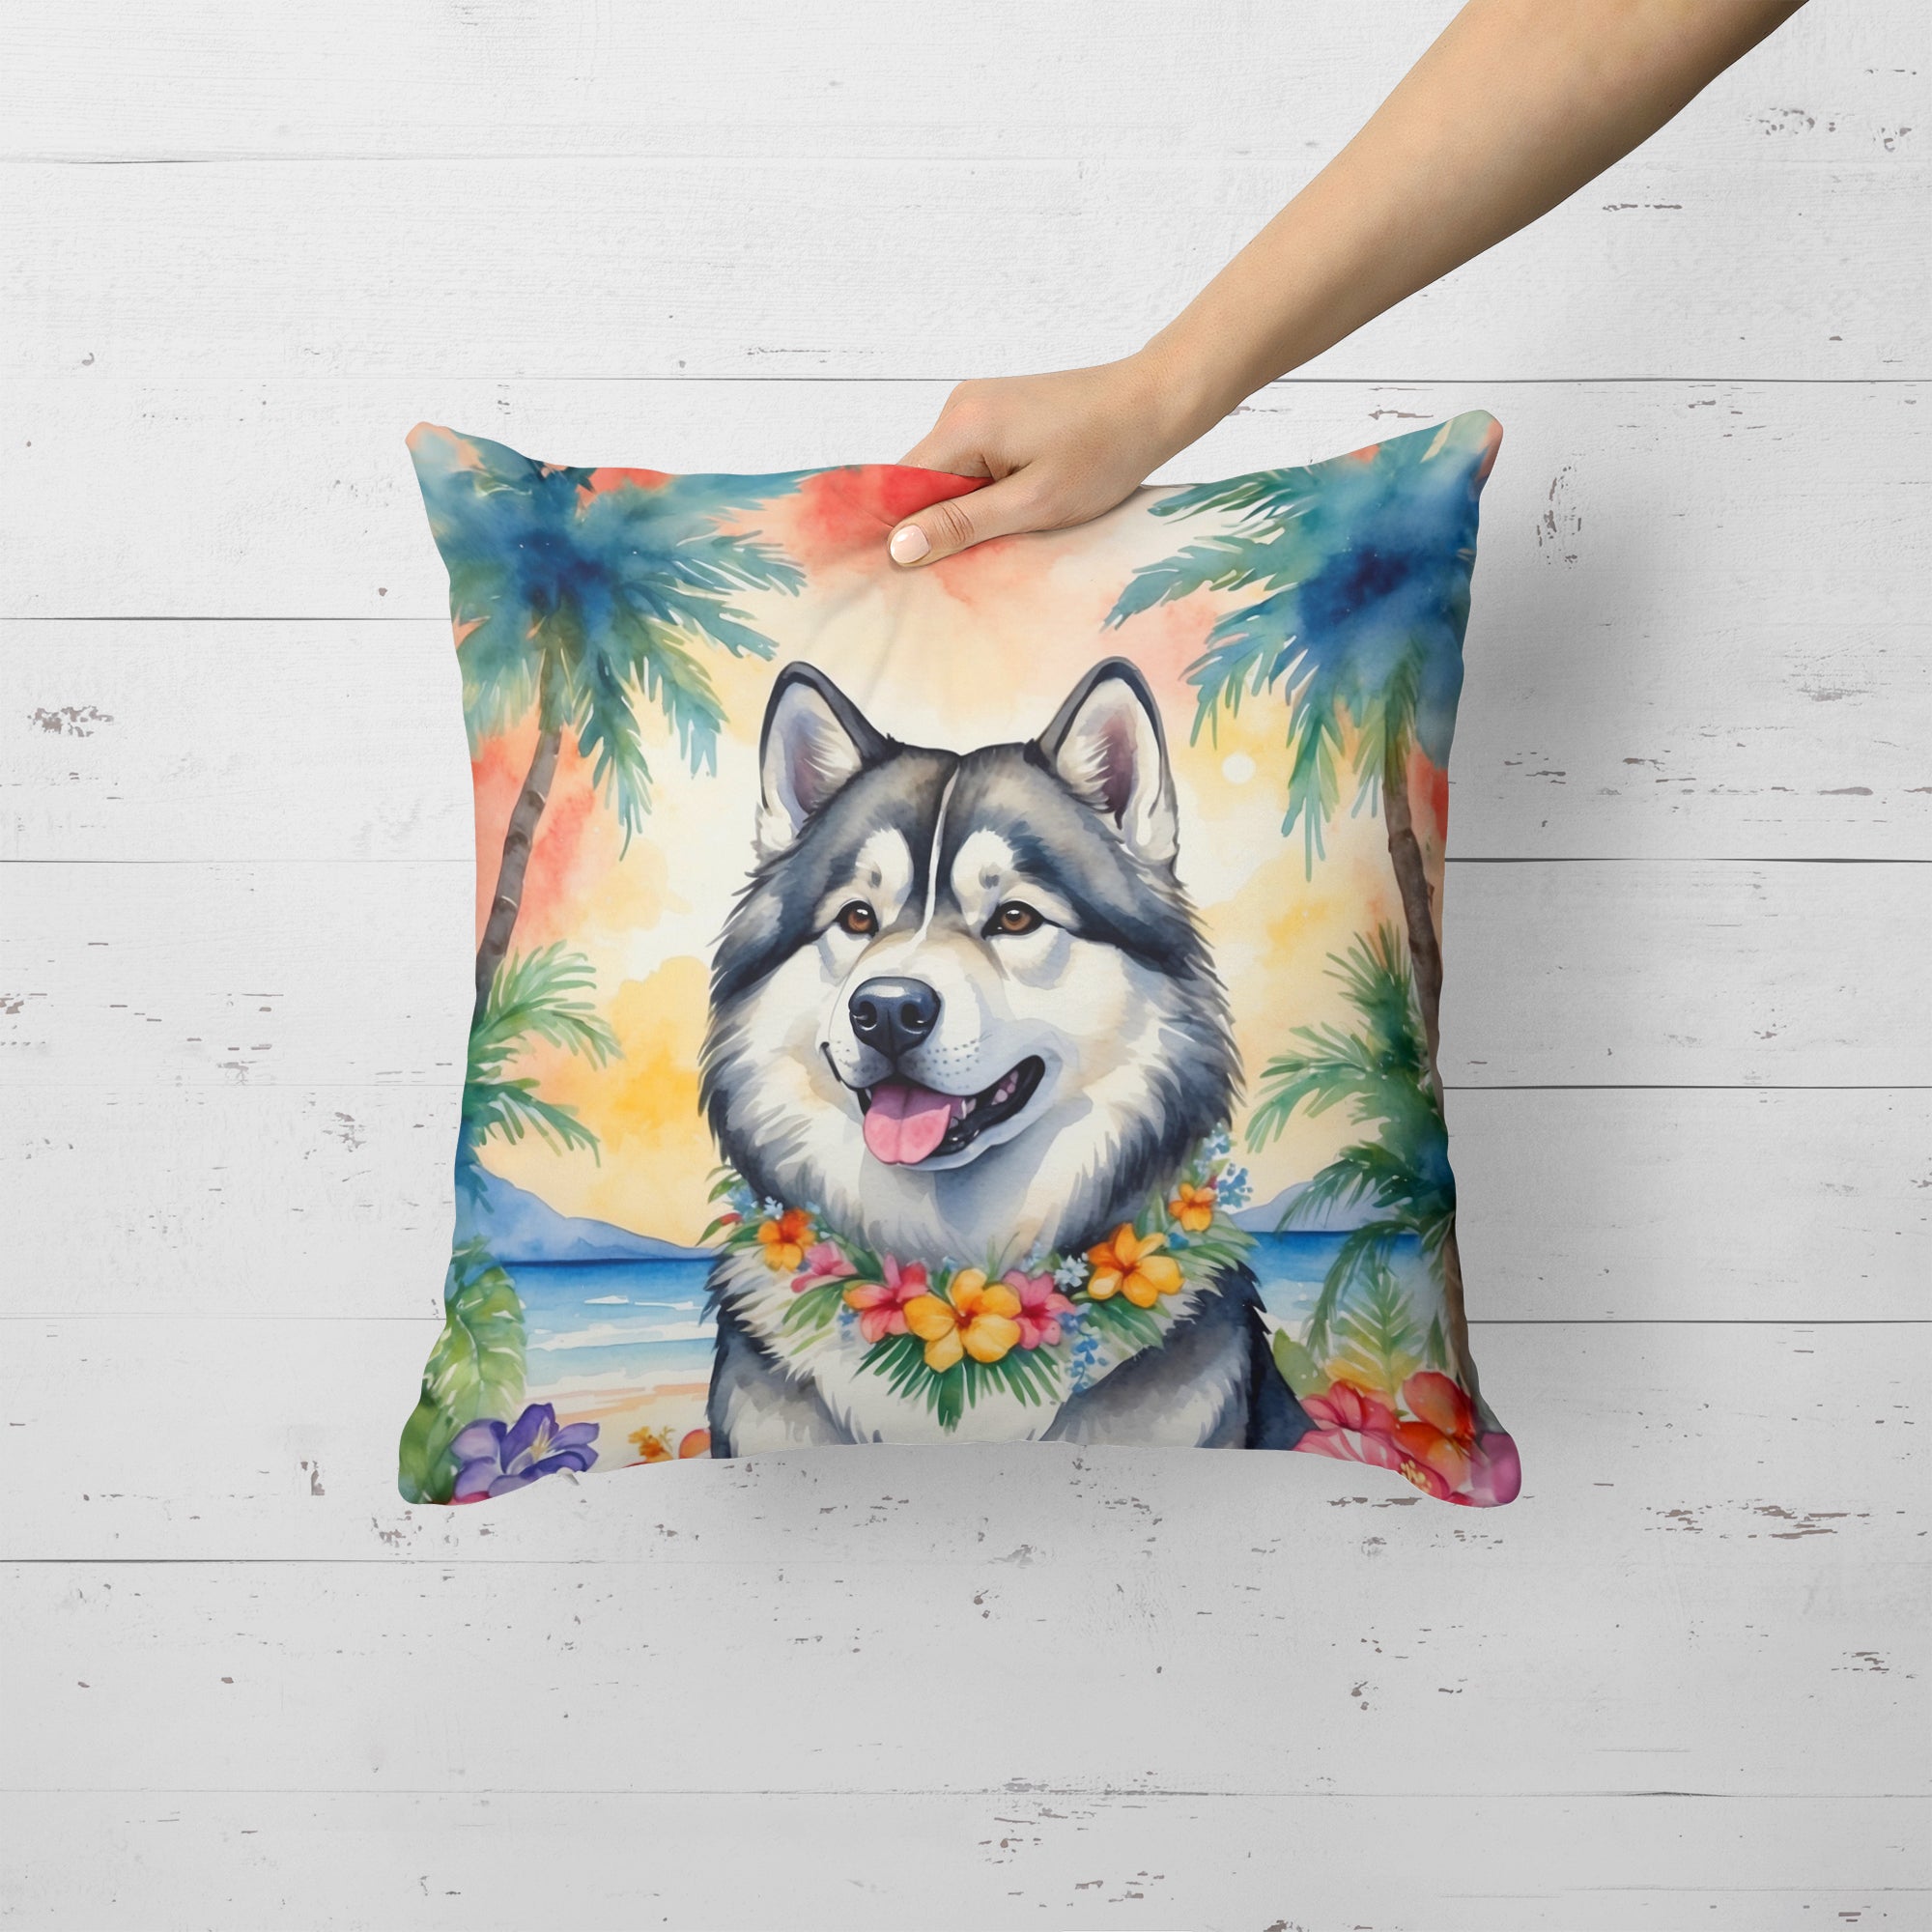 Buy this Alaskan Malamute Luau Throw Pillow